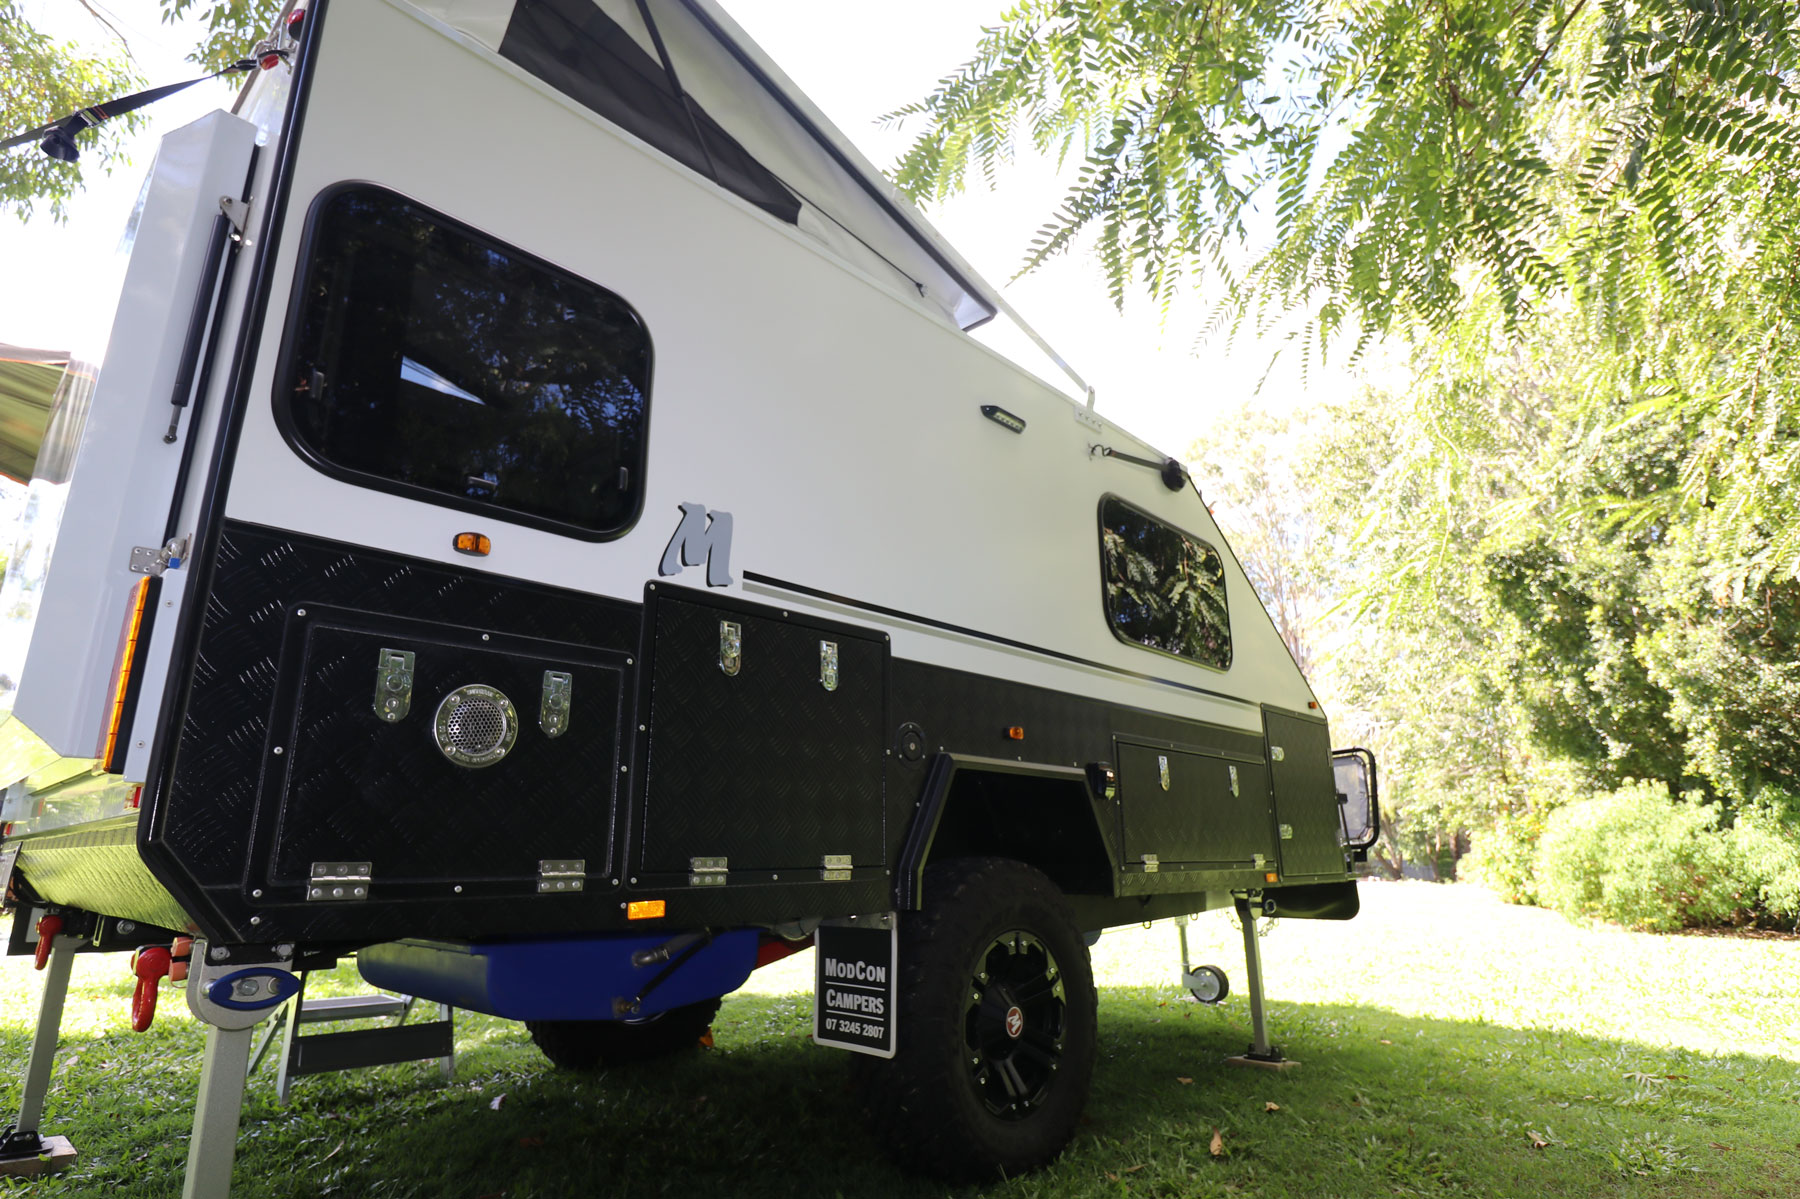 Modcon RV off road hybrid camper trailers C3 driver's side